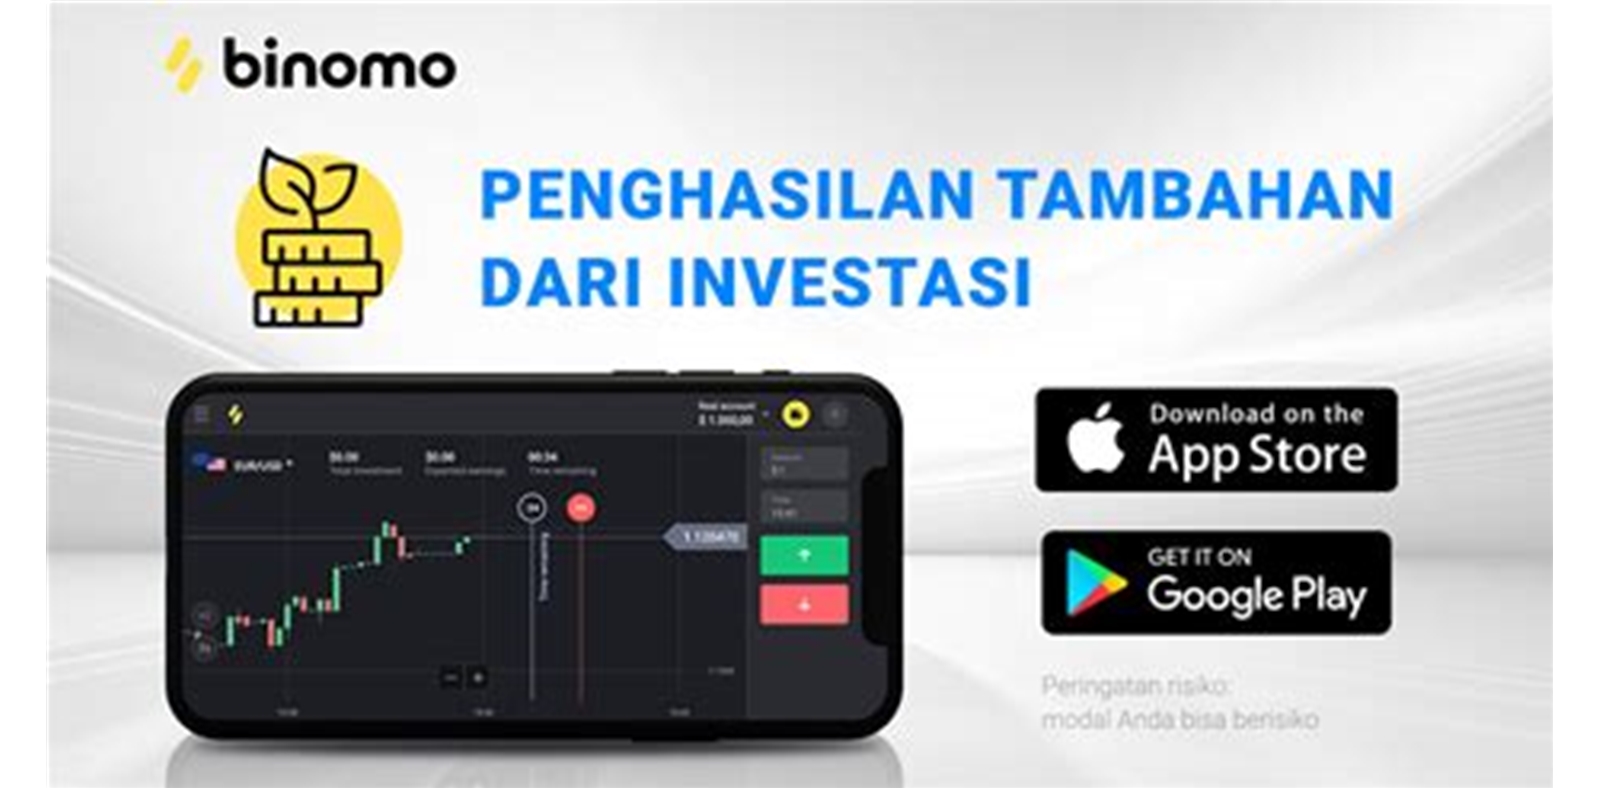 Aplikasi Binomo untuk PC Indonesia